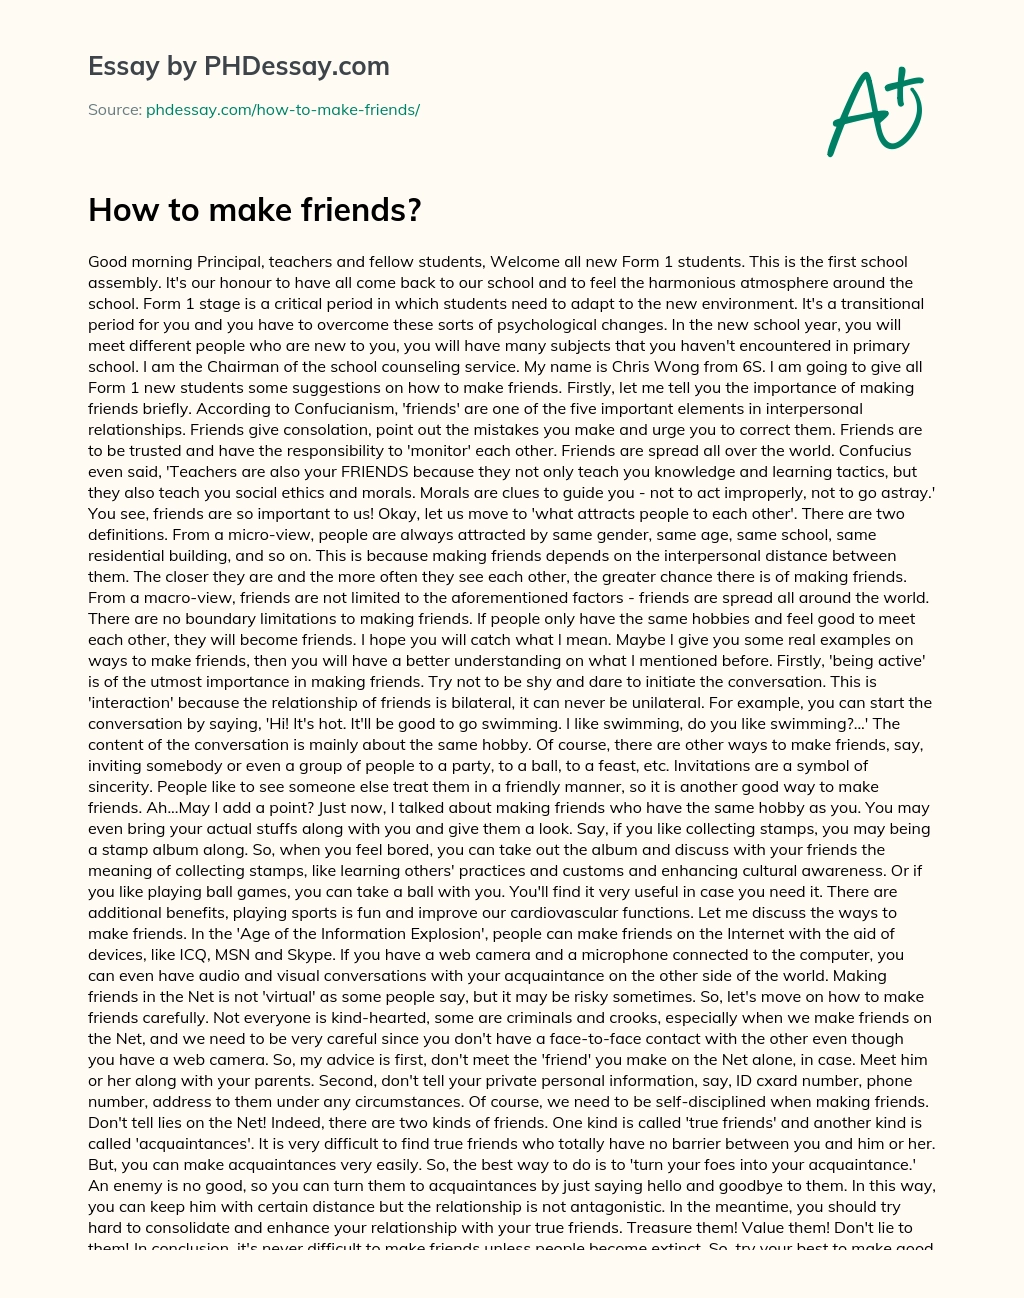 How to make friends? essay